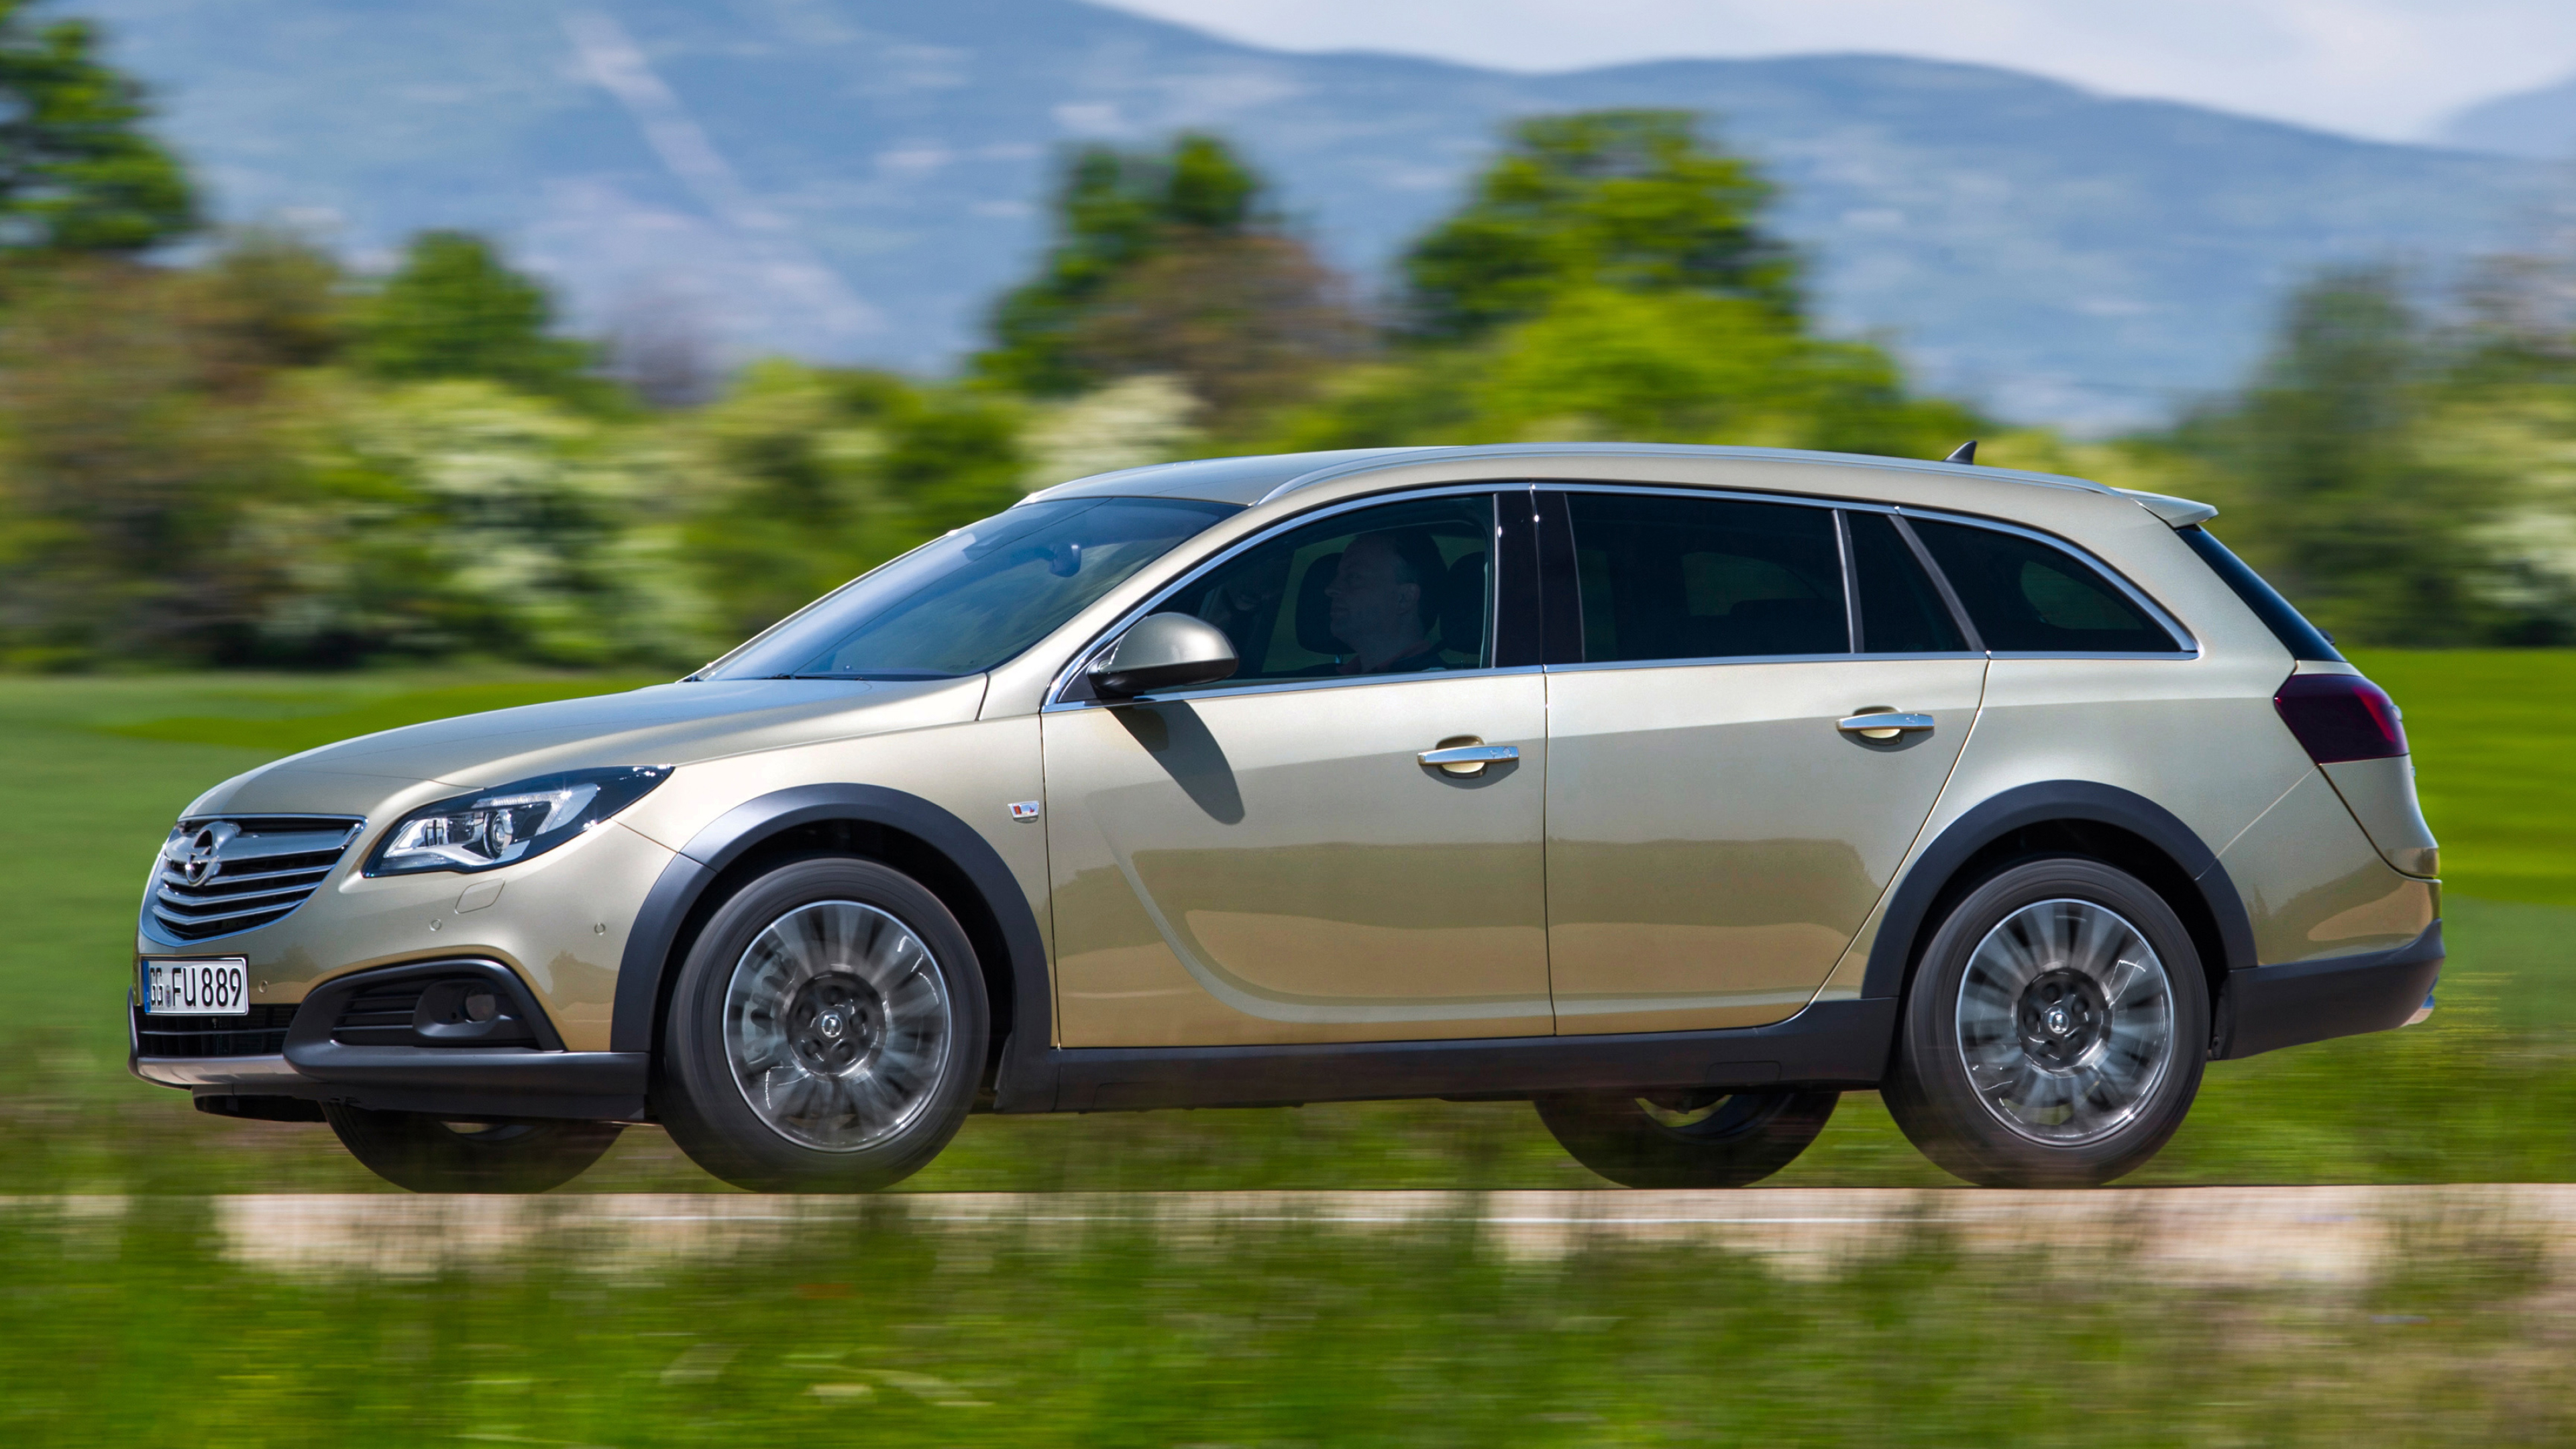 Opel Insignia Country Tourer, High-resolution wallpapers, Luxury car model, Exquisite design, 3840x2160 4K Desktop